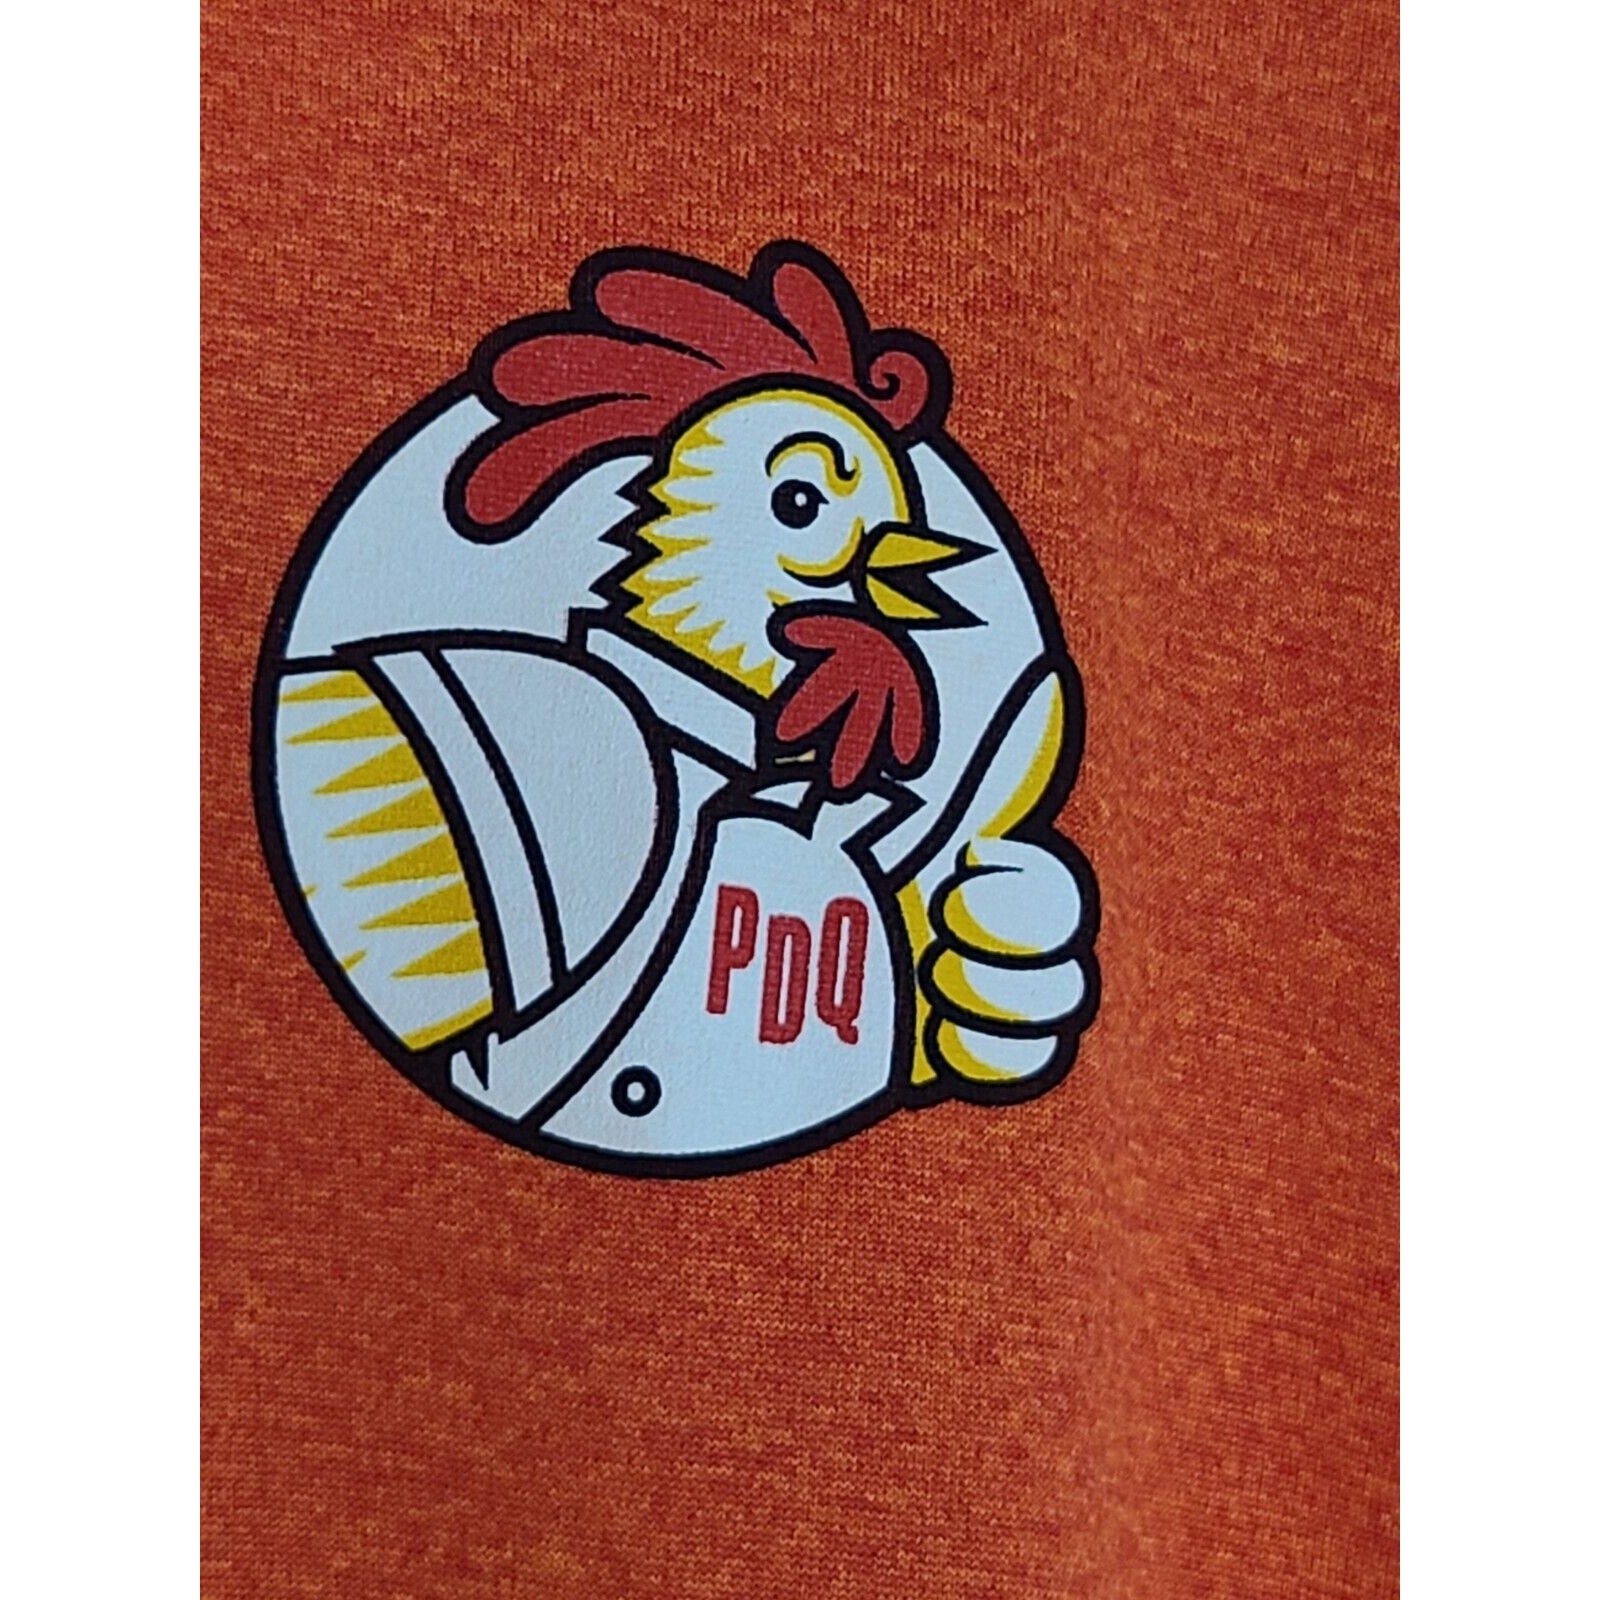 PDQ Shirt Chicken Restaurant Memorabilia Work Shirt Orange Quick Dry T-shirt L